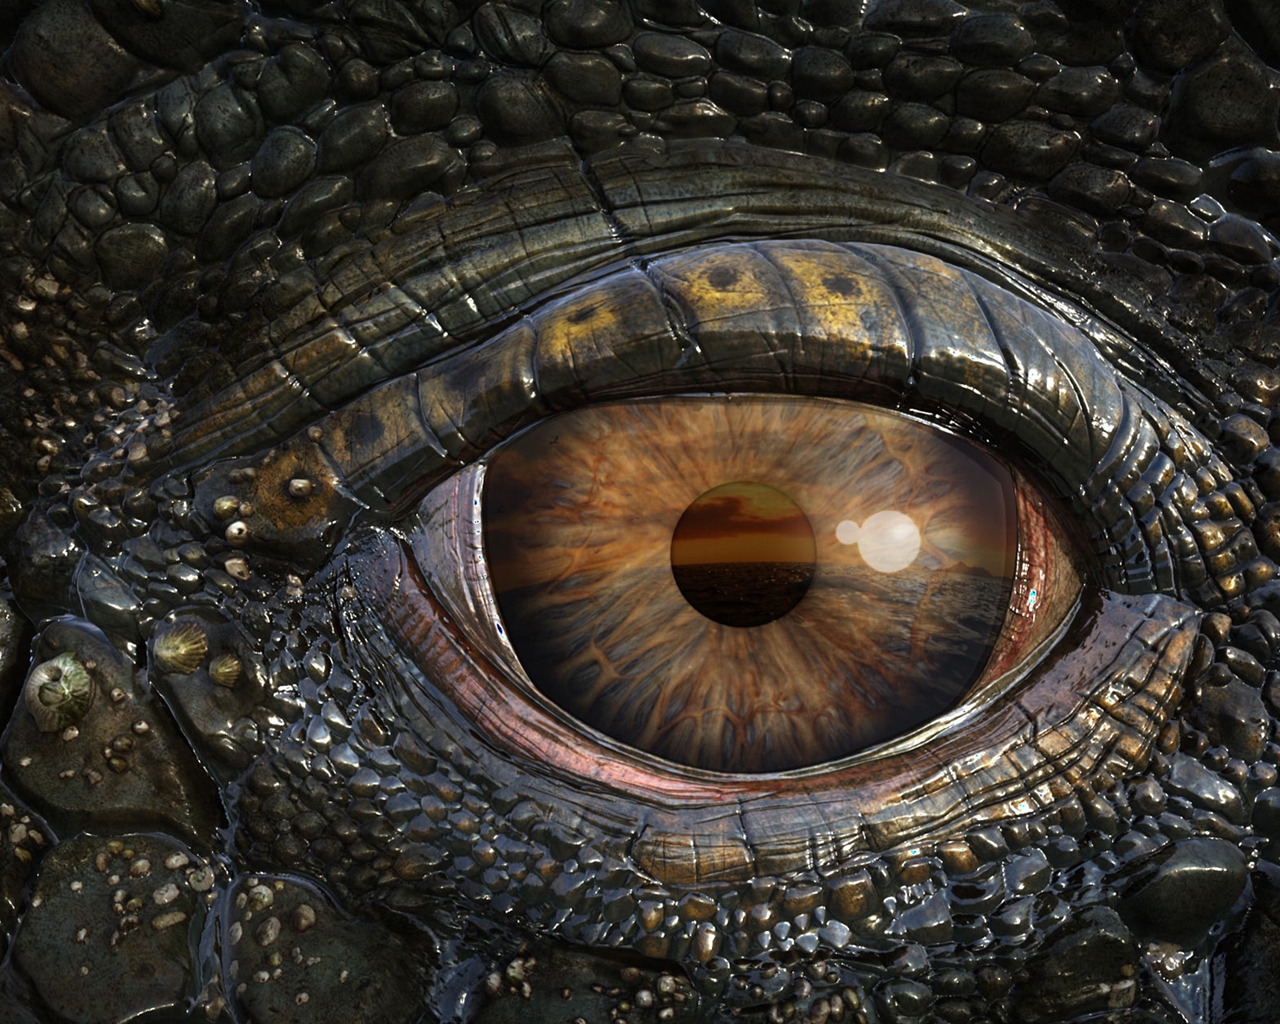 Mosasaur Eye for 1280 x 1024 resolution